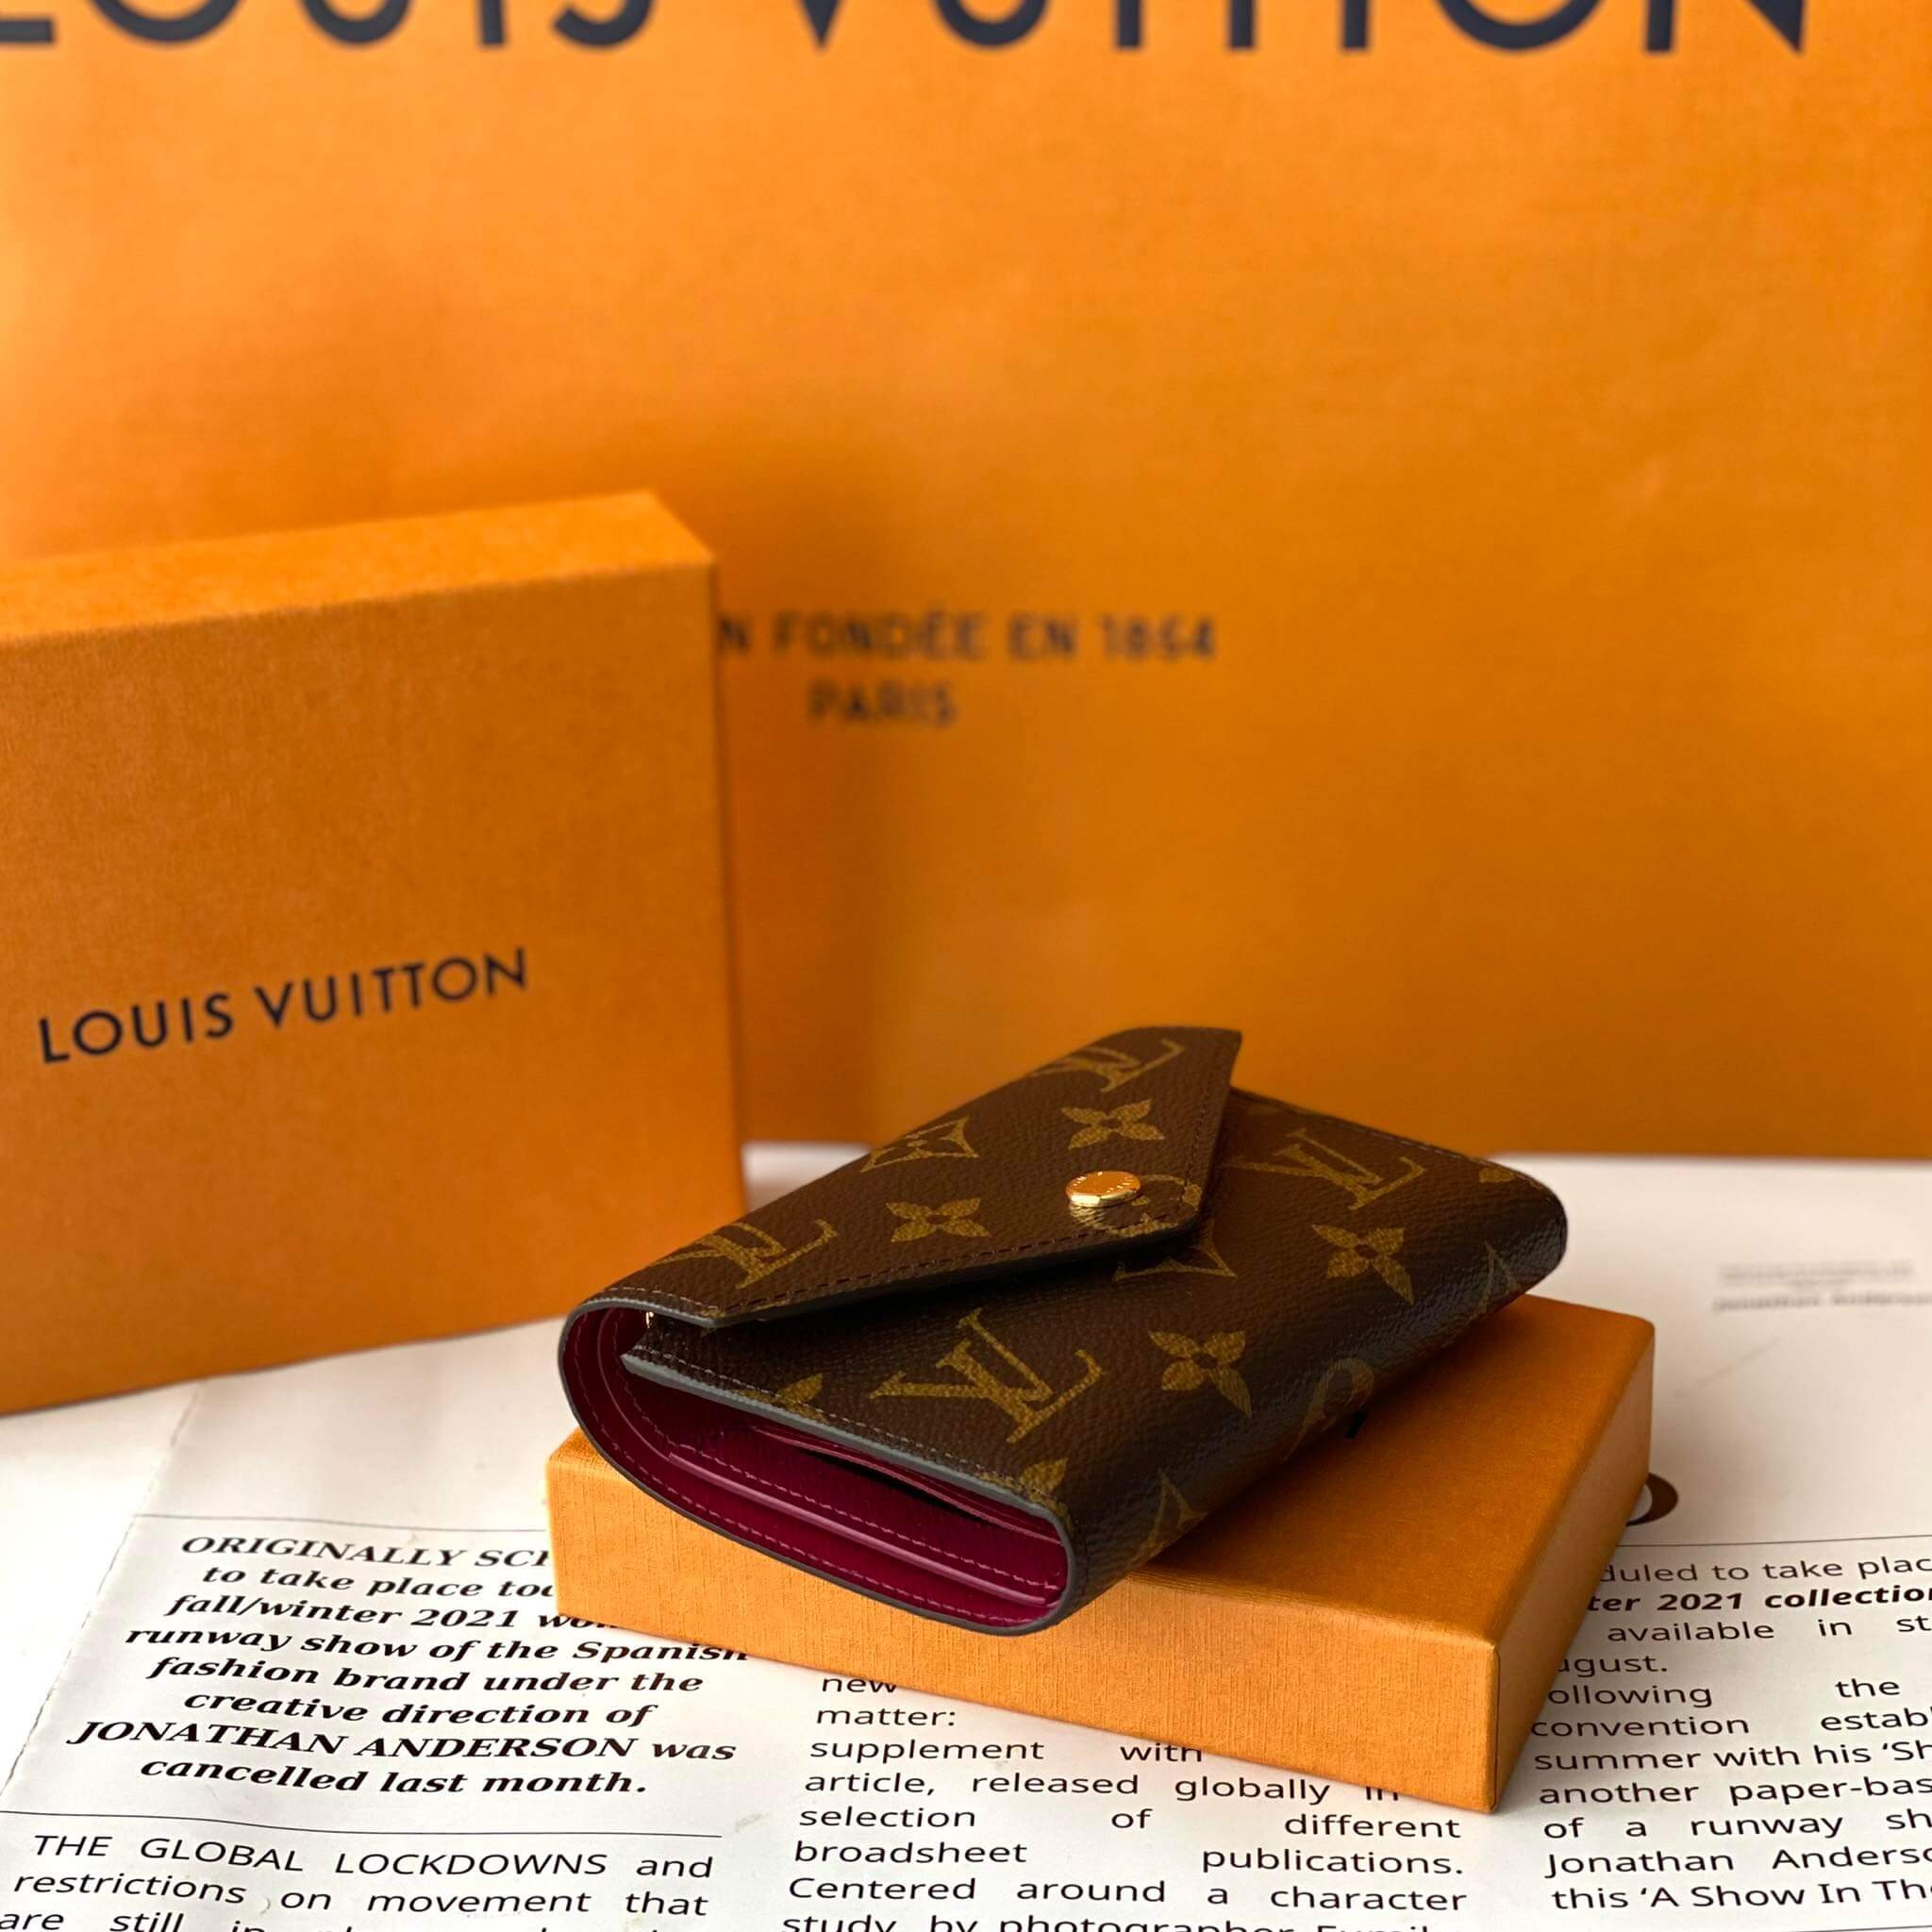 Victorine Wallet Monogram  Women  Small Leather Goods  LOUIS VUITTON 